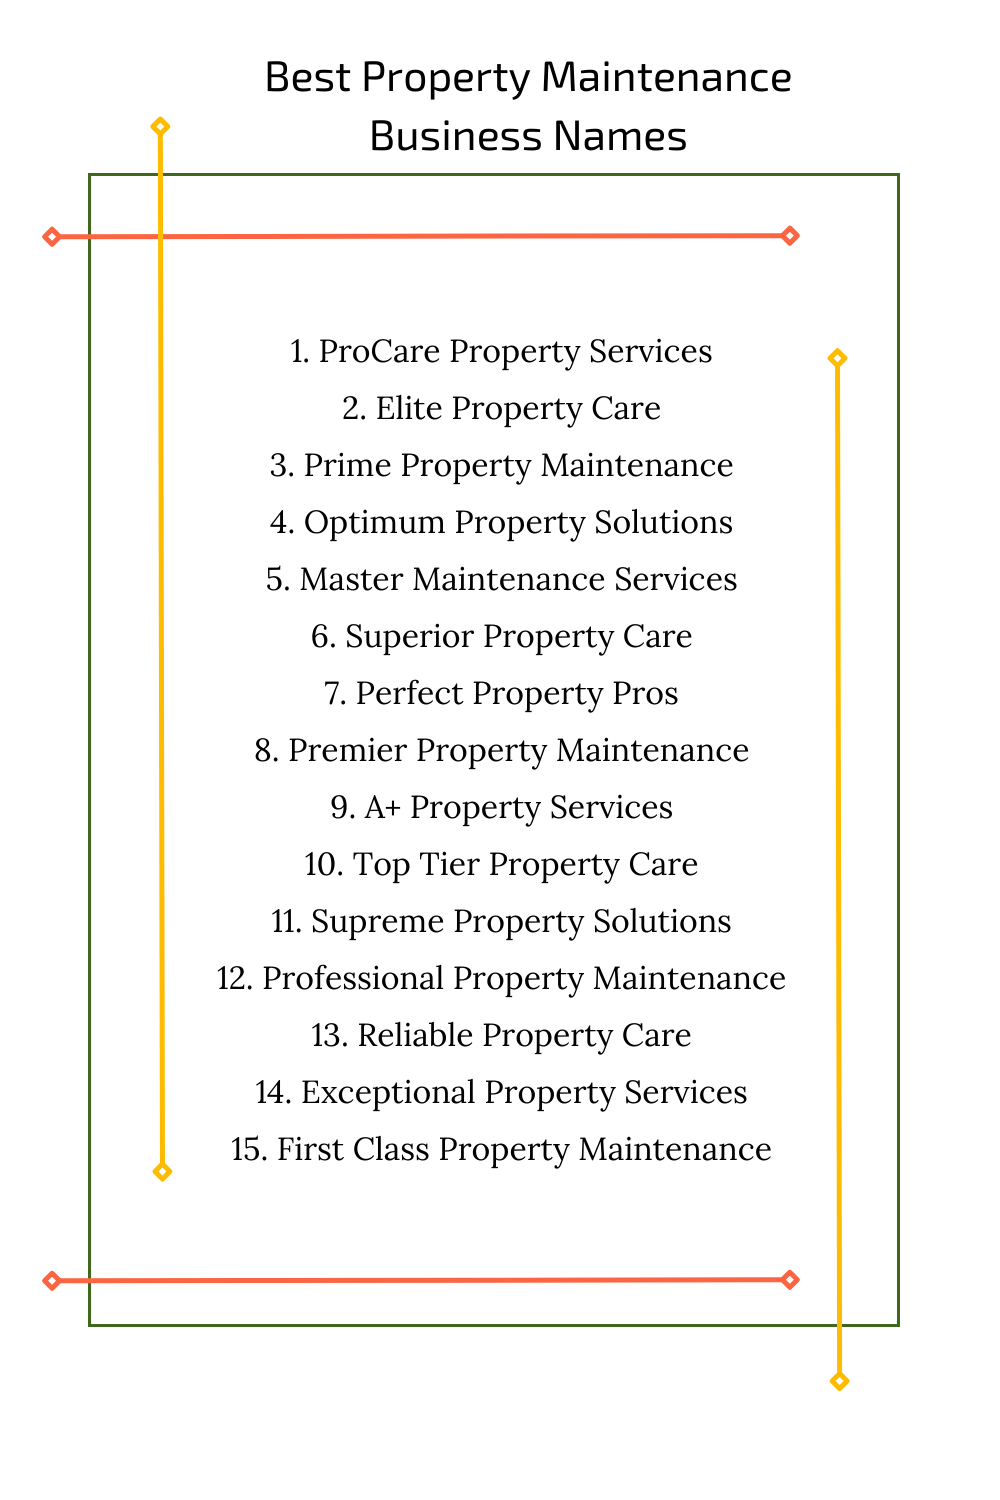 Best Property Maintenance Business Names